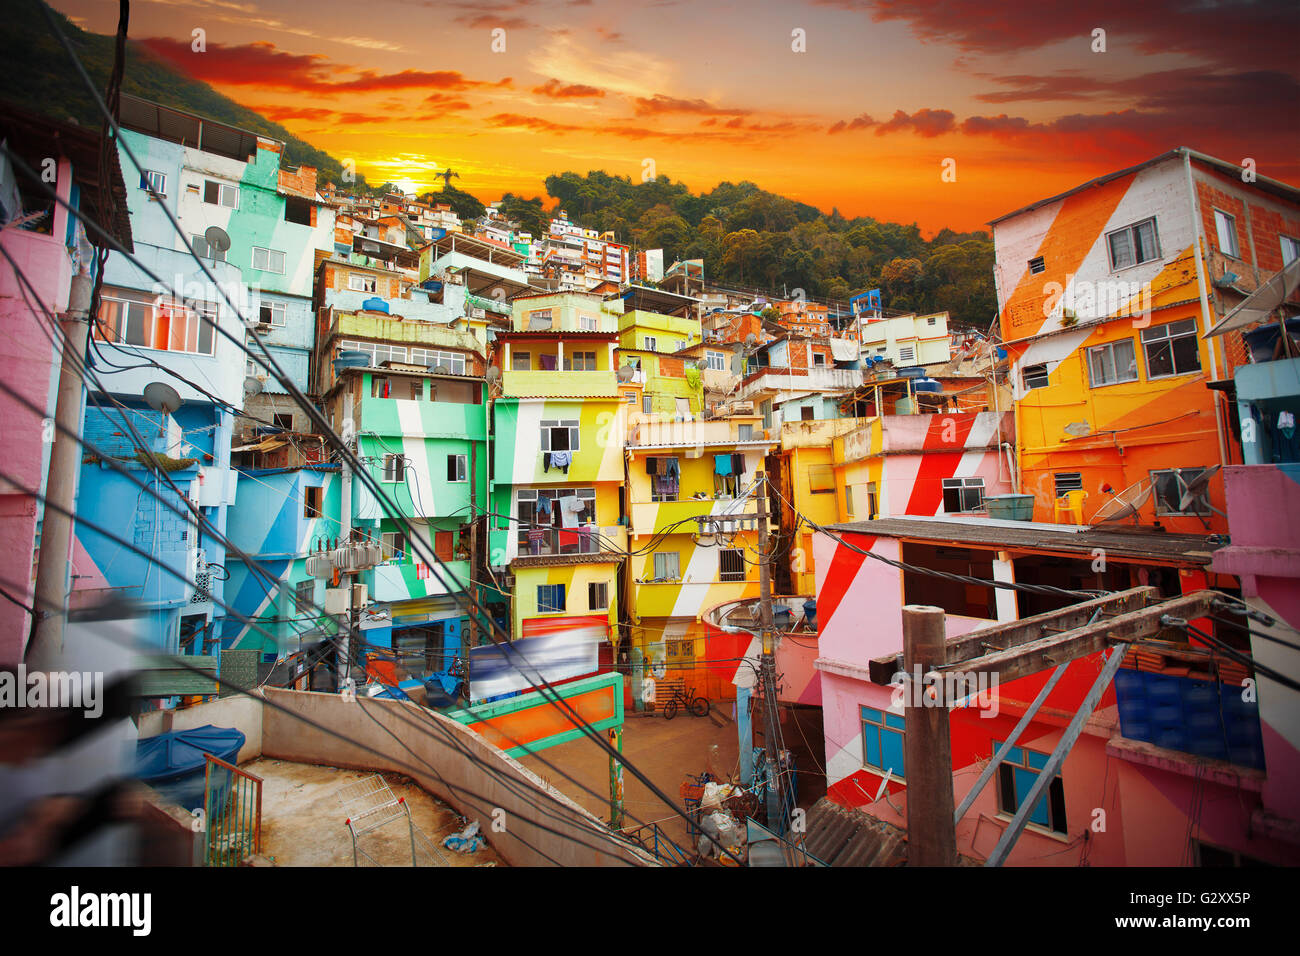 Rio de Janeiro downtown and favela. Brazil Stock Photo - Alamy